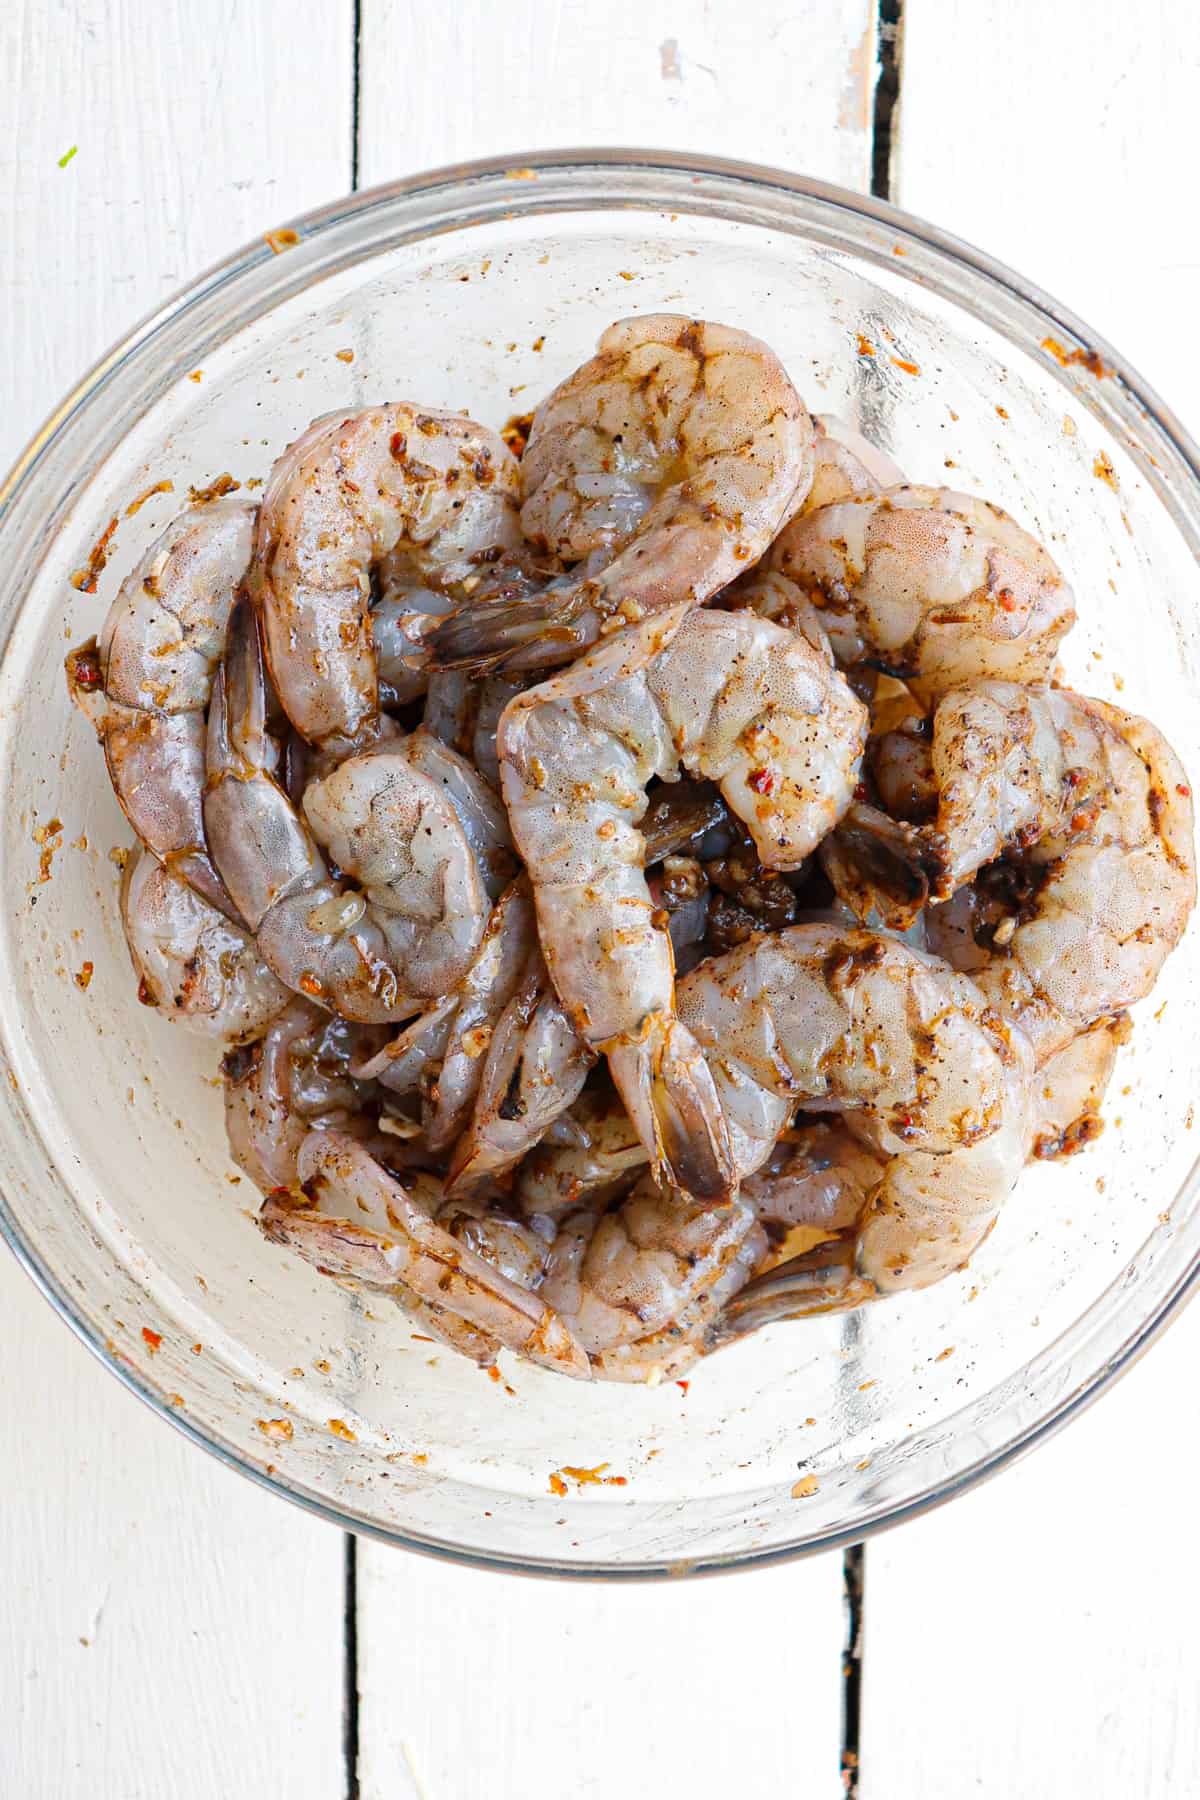 raw shrimp coated in jerk marinade.